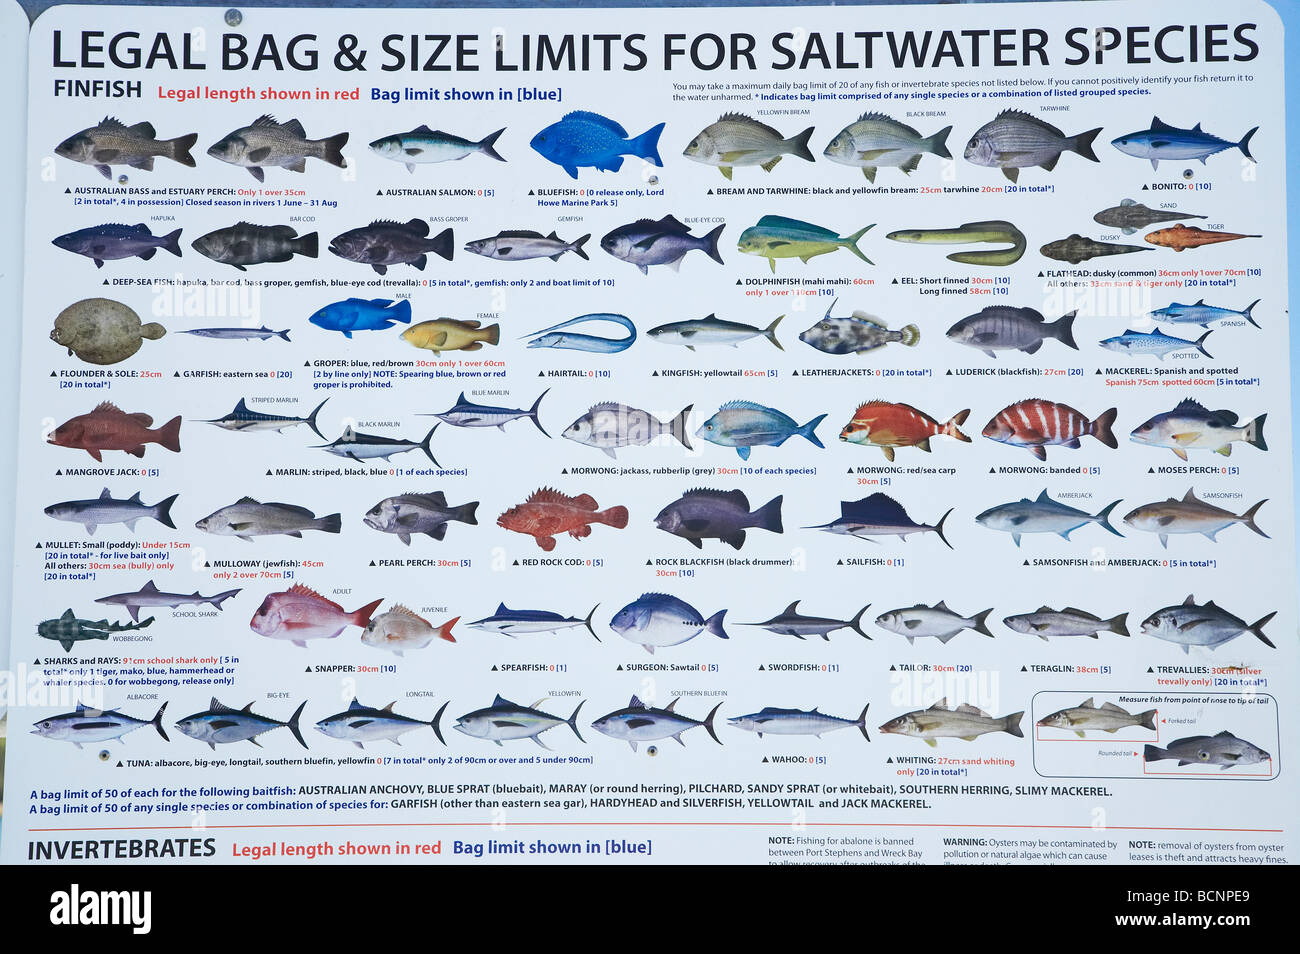 Fish Identification Chart Ontario